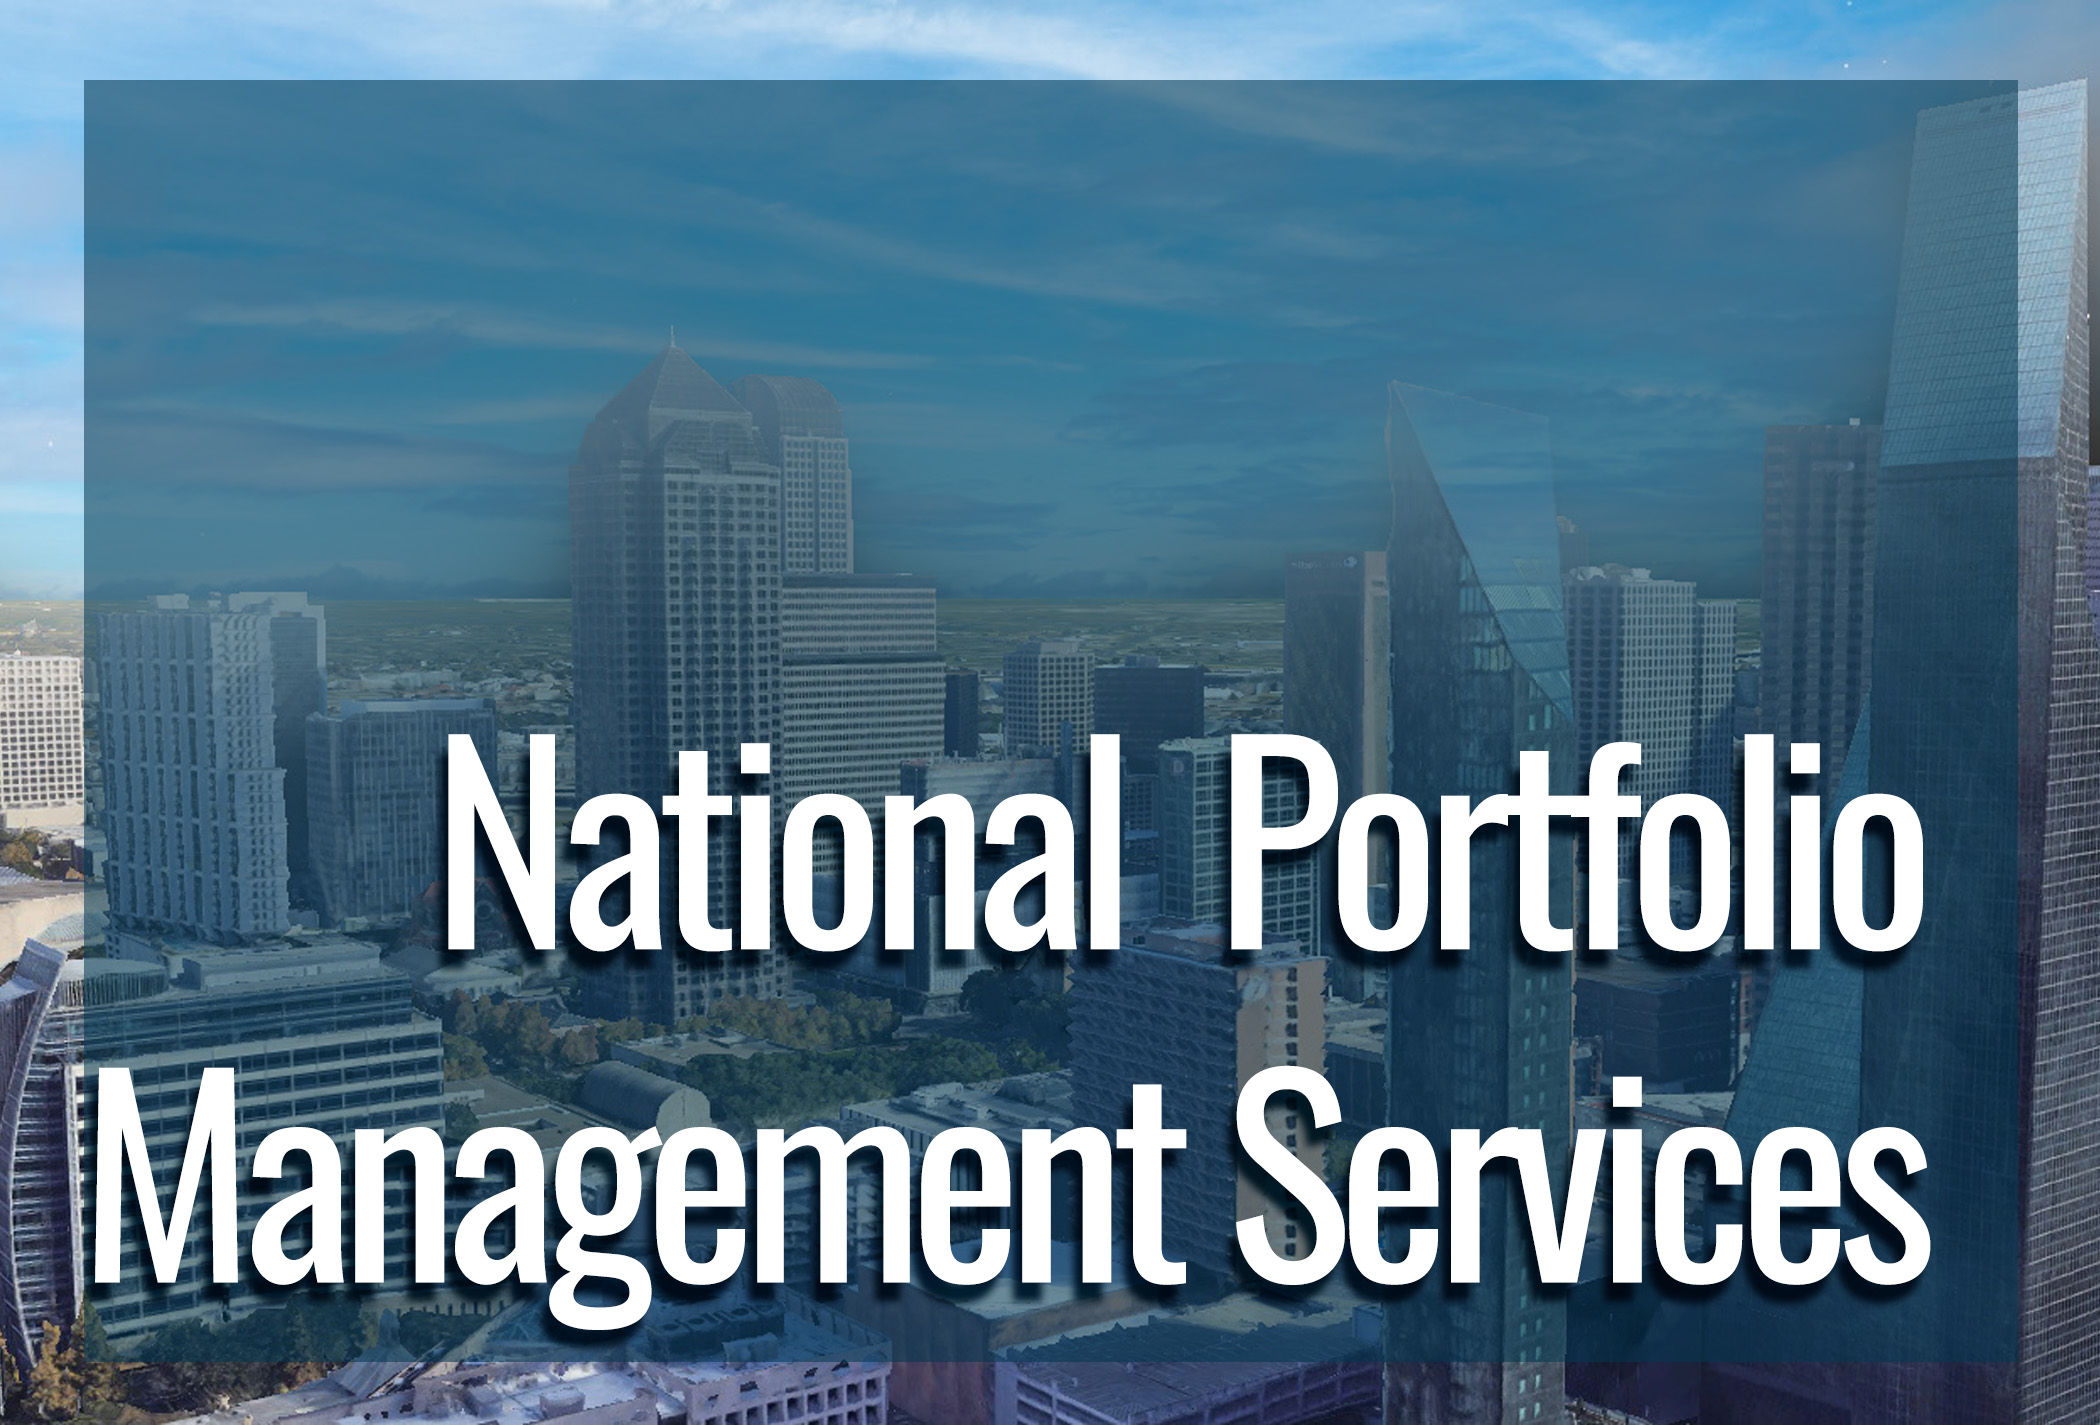 National Portfolio Management Services